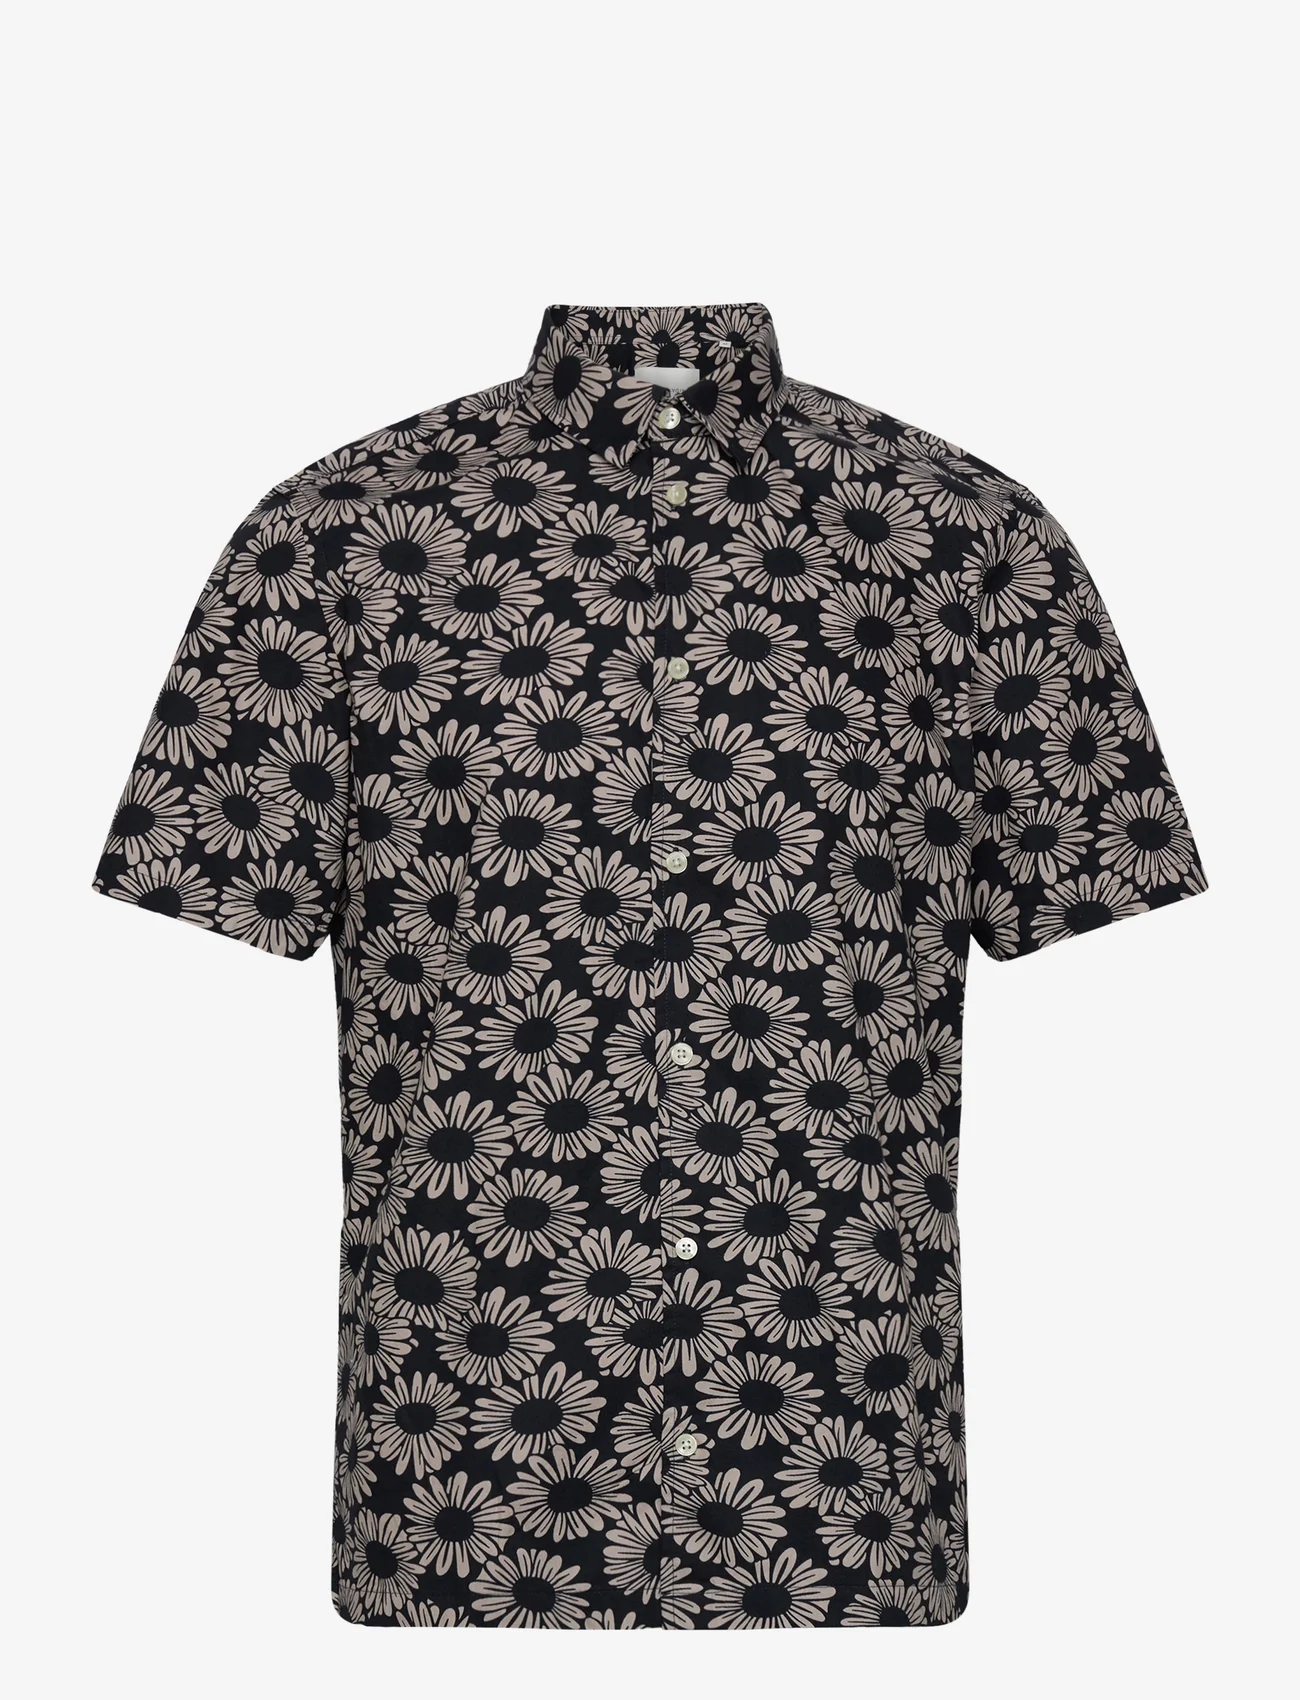 Casual Friday - CFAnton SS flower printed shirt - short-sleeved shirts - dark navy - 0